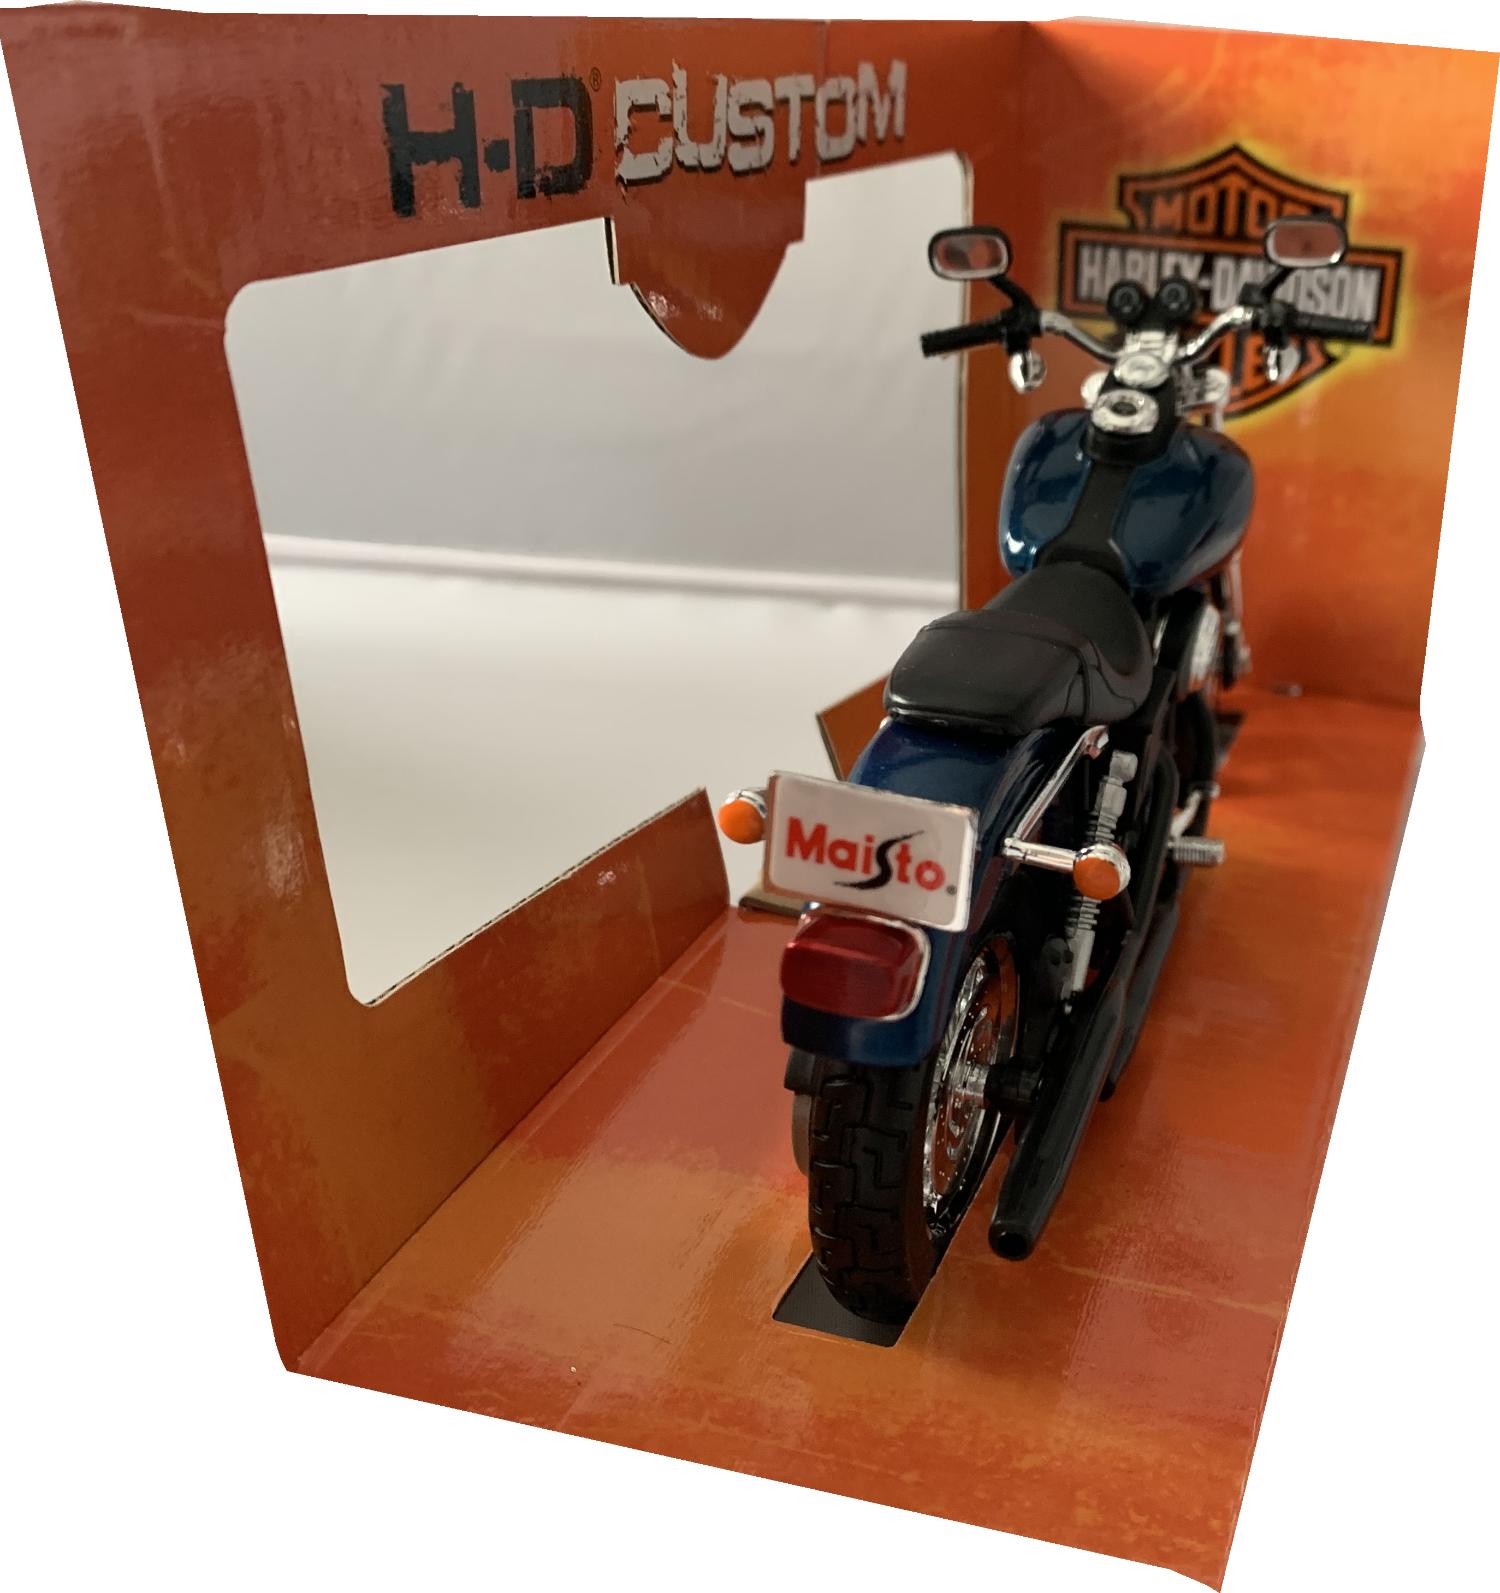 Harley Davidson 2004 Dyna Super Glide Sport in metallic blue 1:12 scale model motorbike from Maisto